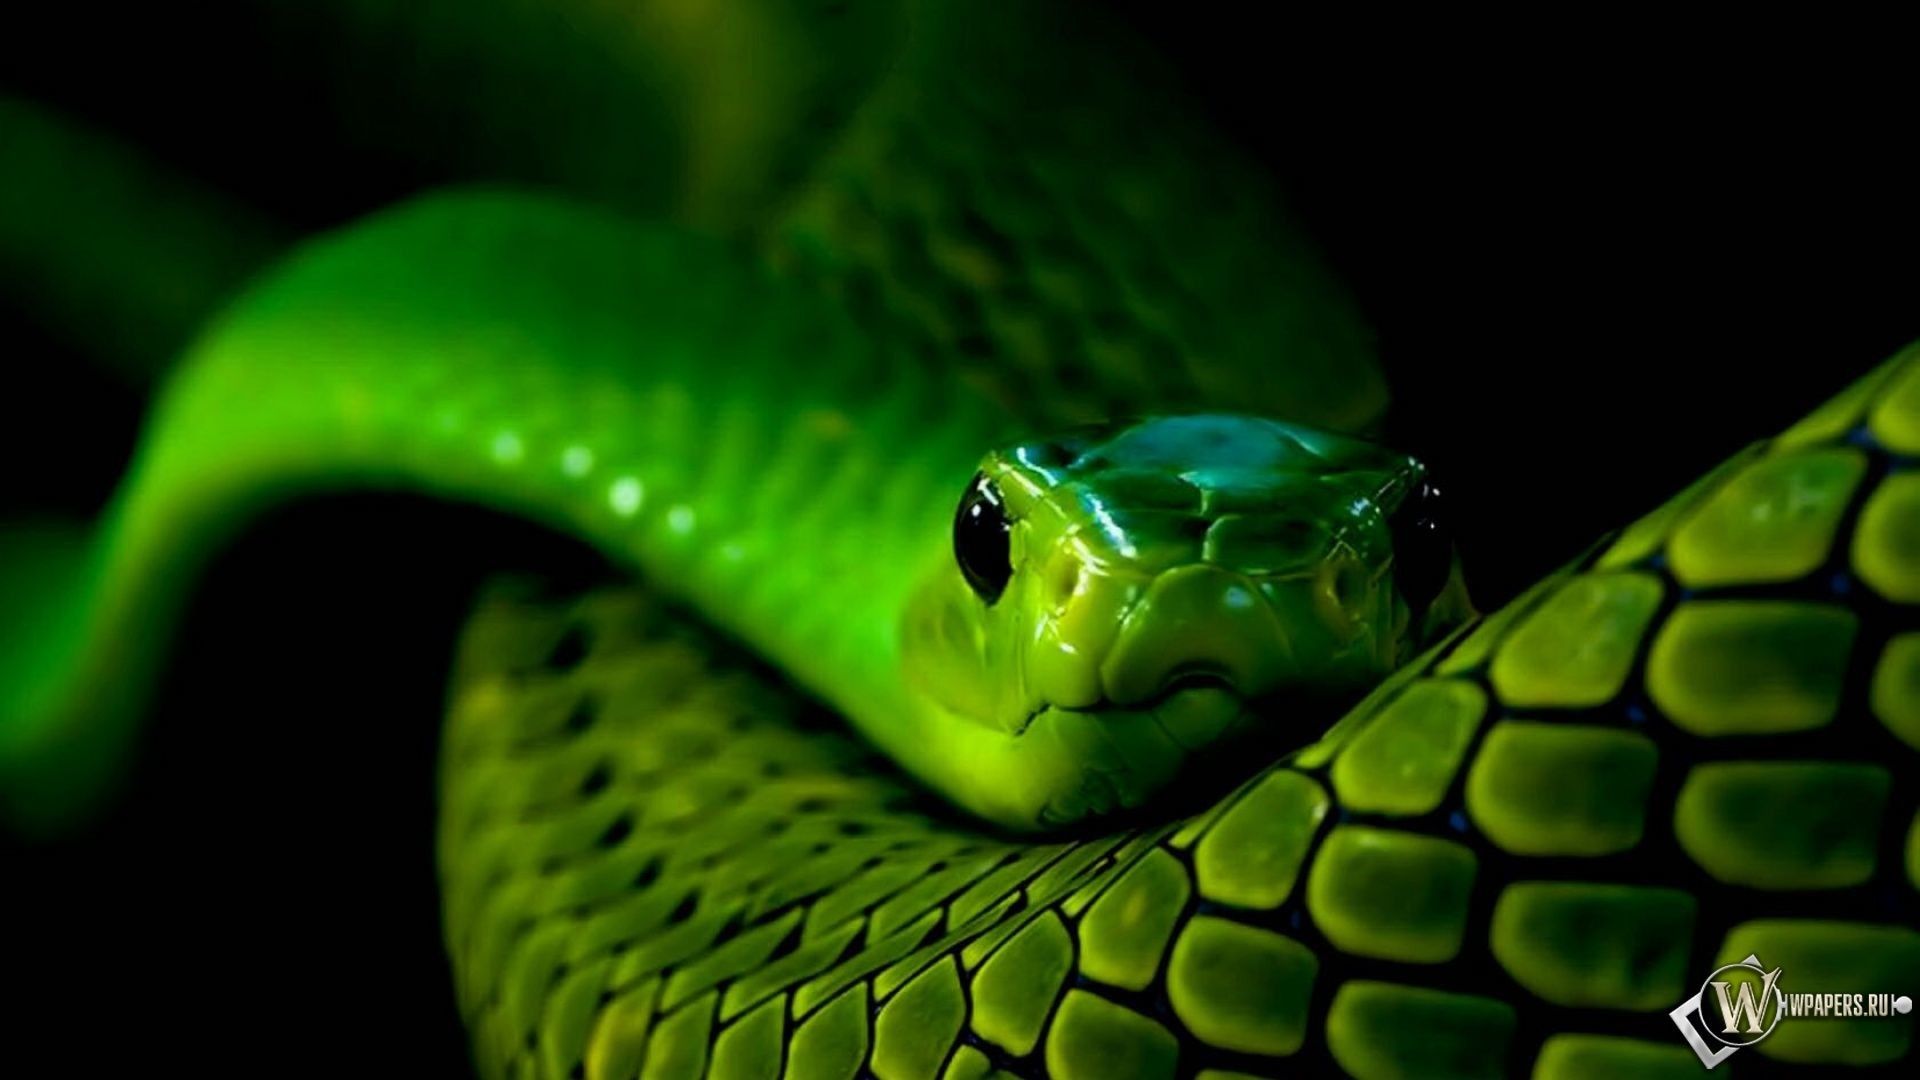 Neon Green Snake Wallpaperwalpaperlist.com